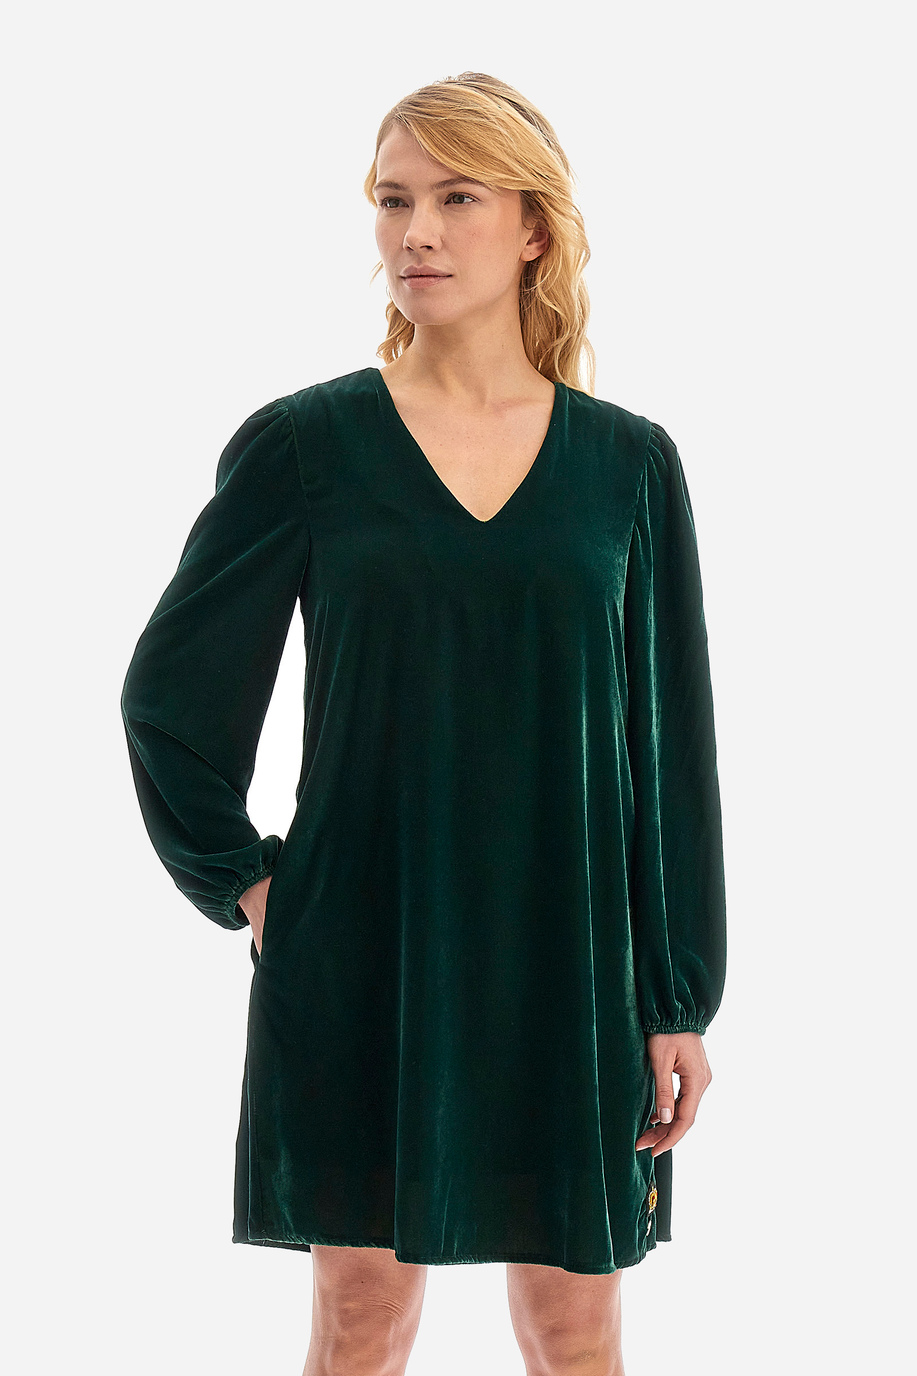 Robe femme coupe classique - Walberga - Robes | La Martina - Official Online Shop